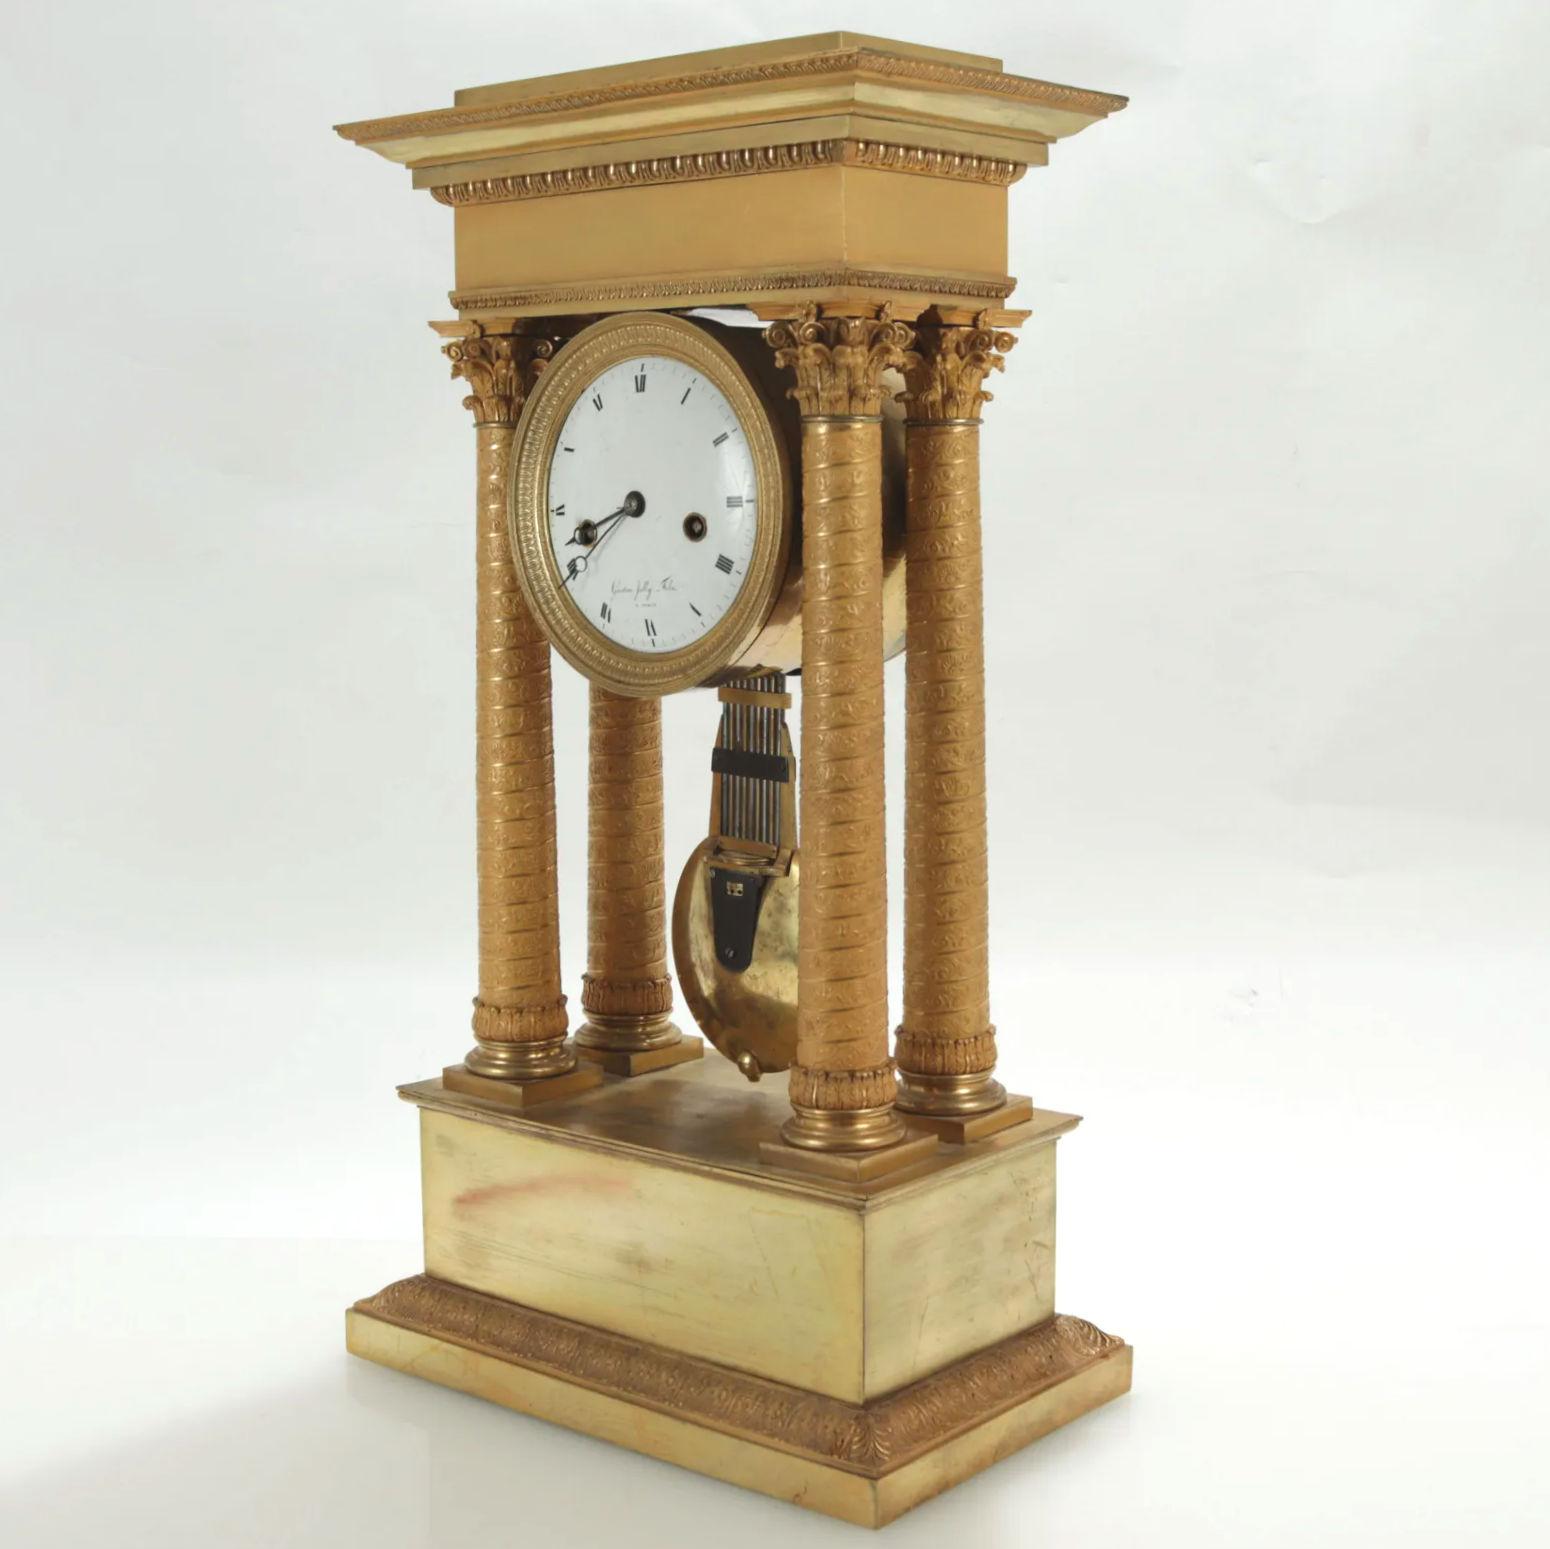 French Empire Ormolu Bronze Portico Mantel Clock by Gaston Jolly, Paris, Circa 1810s, with original pendulum.